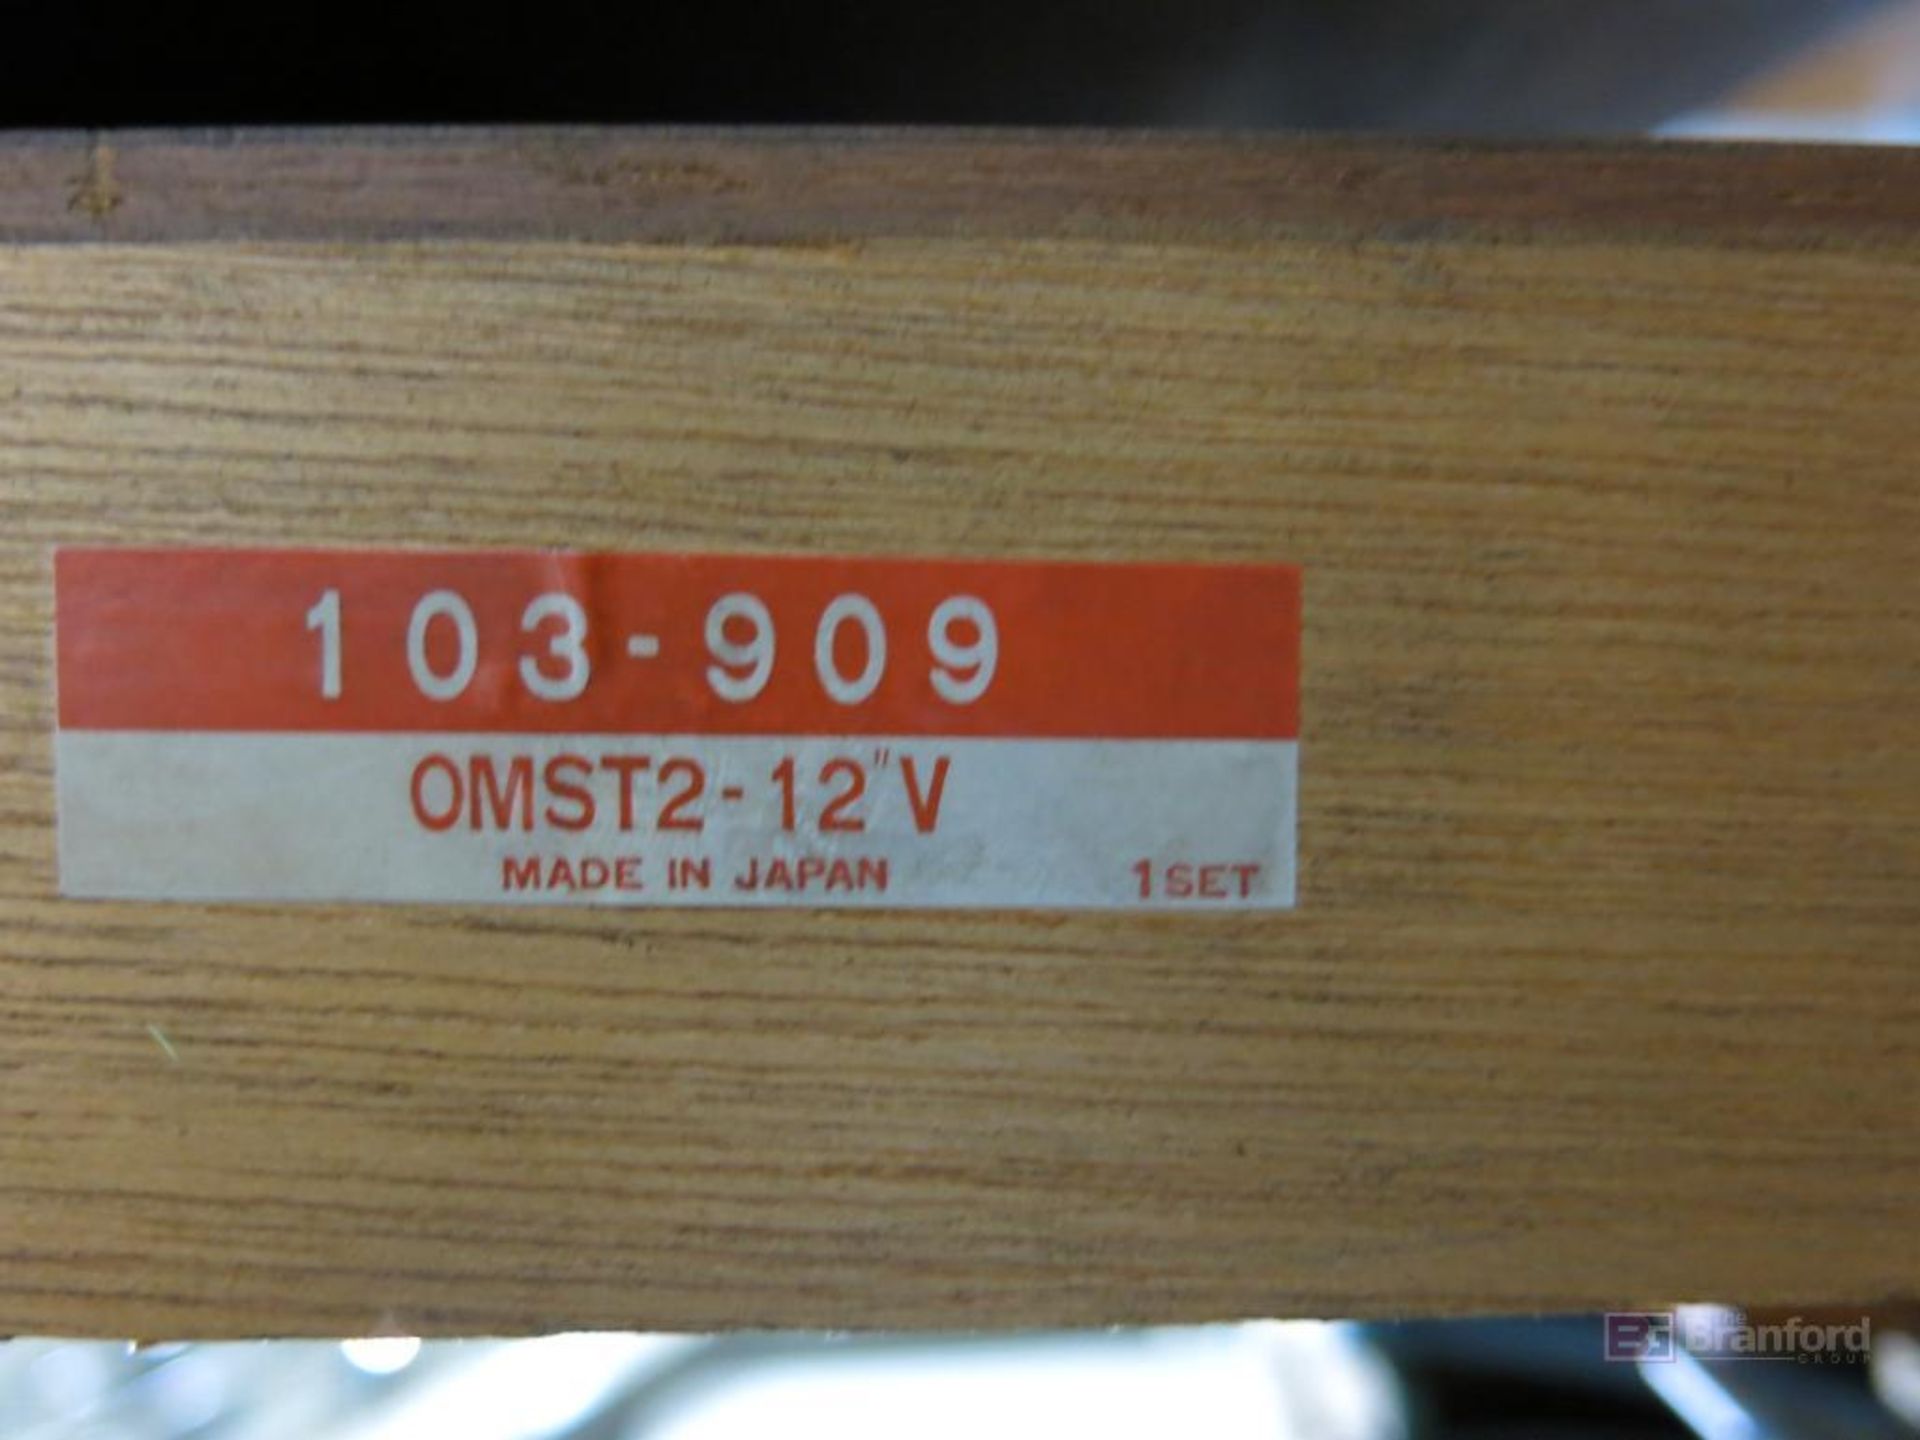 Mitutoyo Micrometer Set Size Range 7-8" to 11-12" - Image 2 of 2